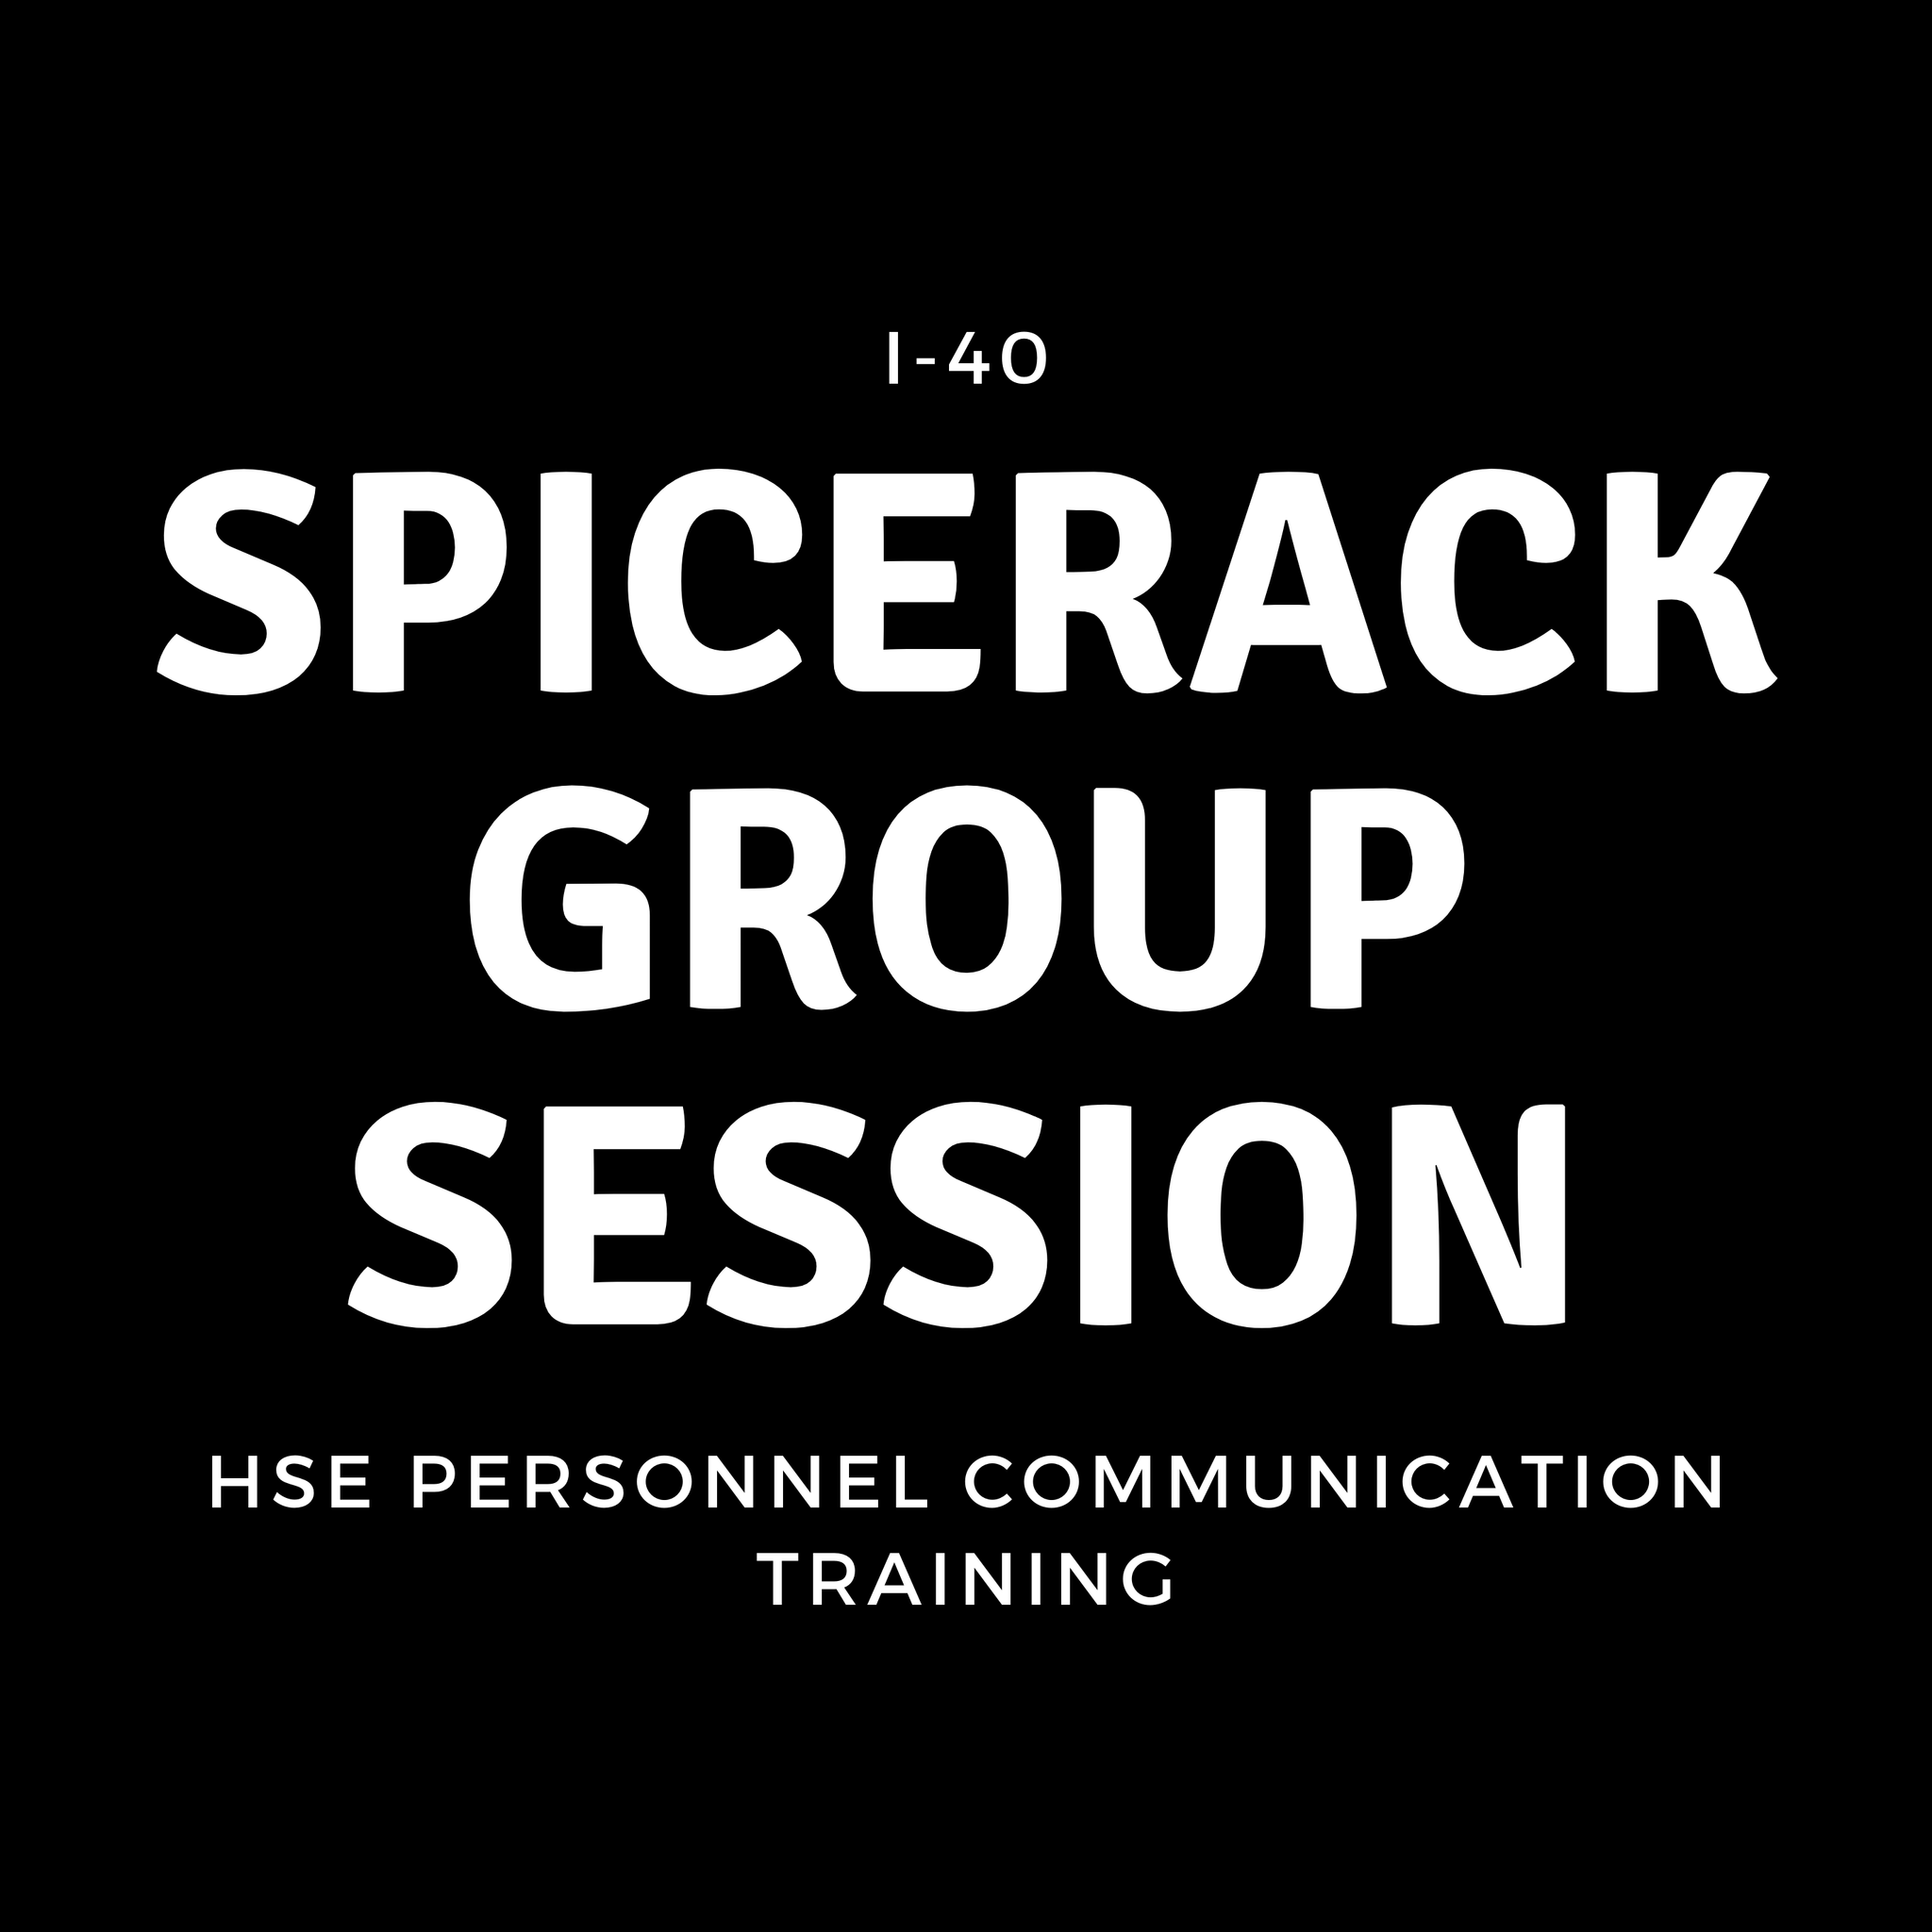 SpiceRack group session - Human Performance Communication Training